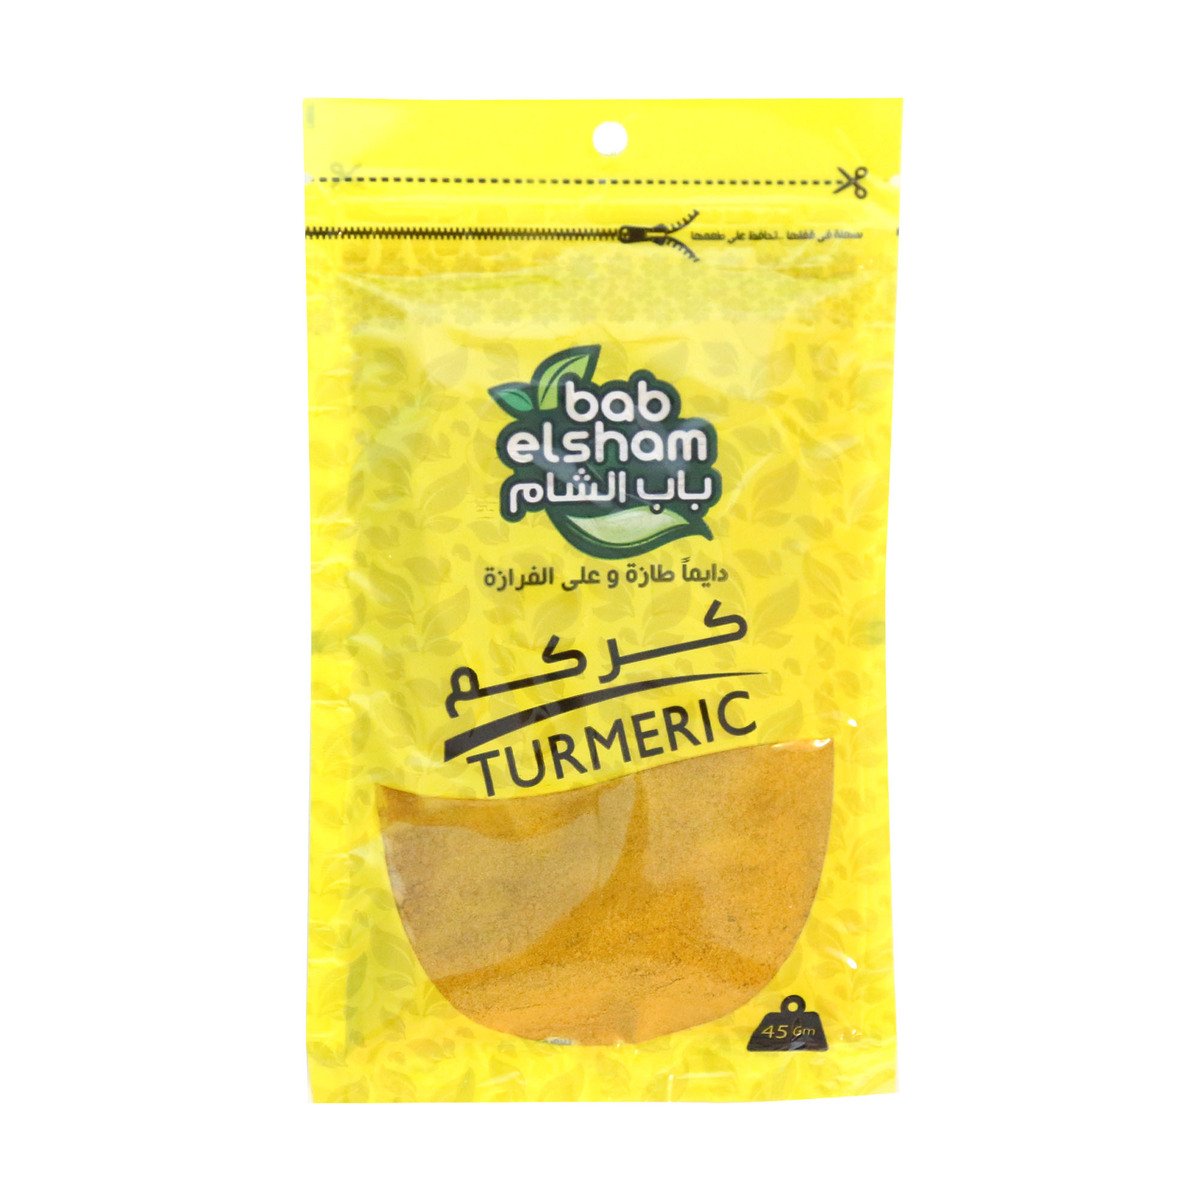 Bab El Sham Turmeric Powder 45 g